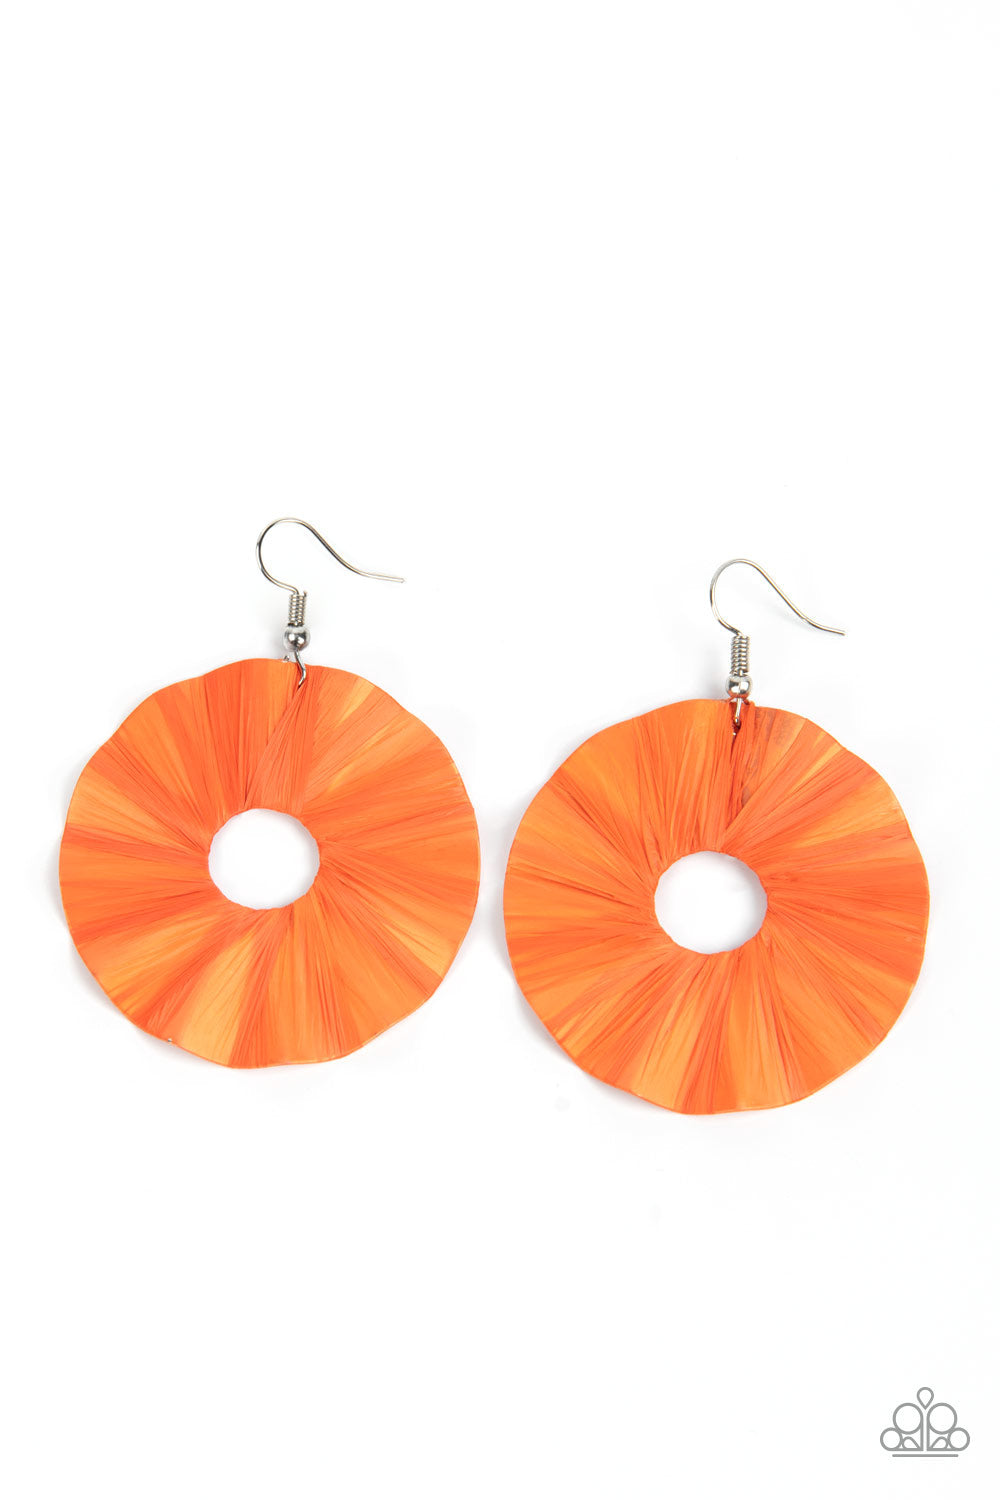 the Breeze - Orange Earrings - Paparazzi Accessories Bedazzle Me Pretty Mobile Fashion Boutique